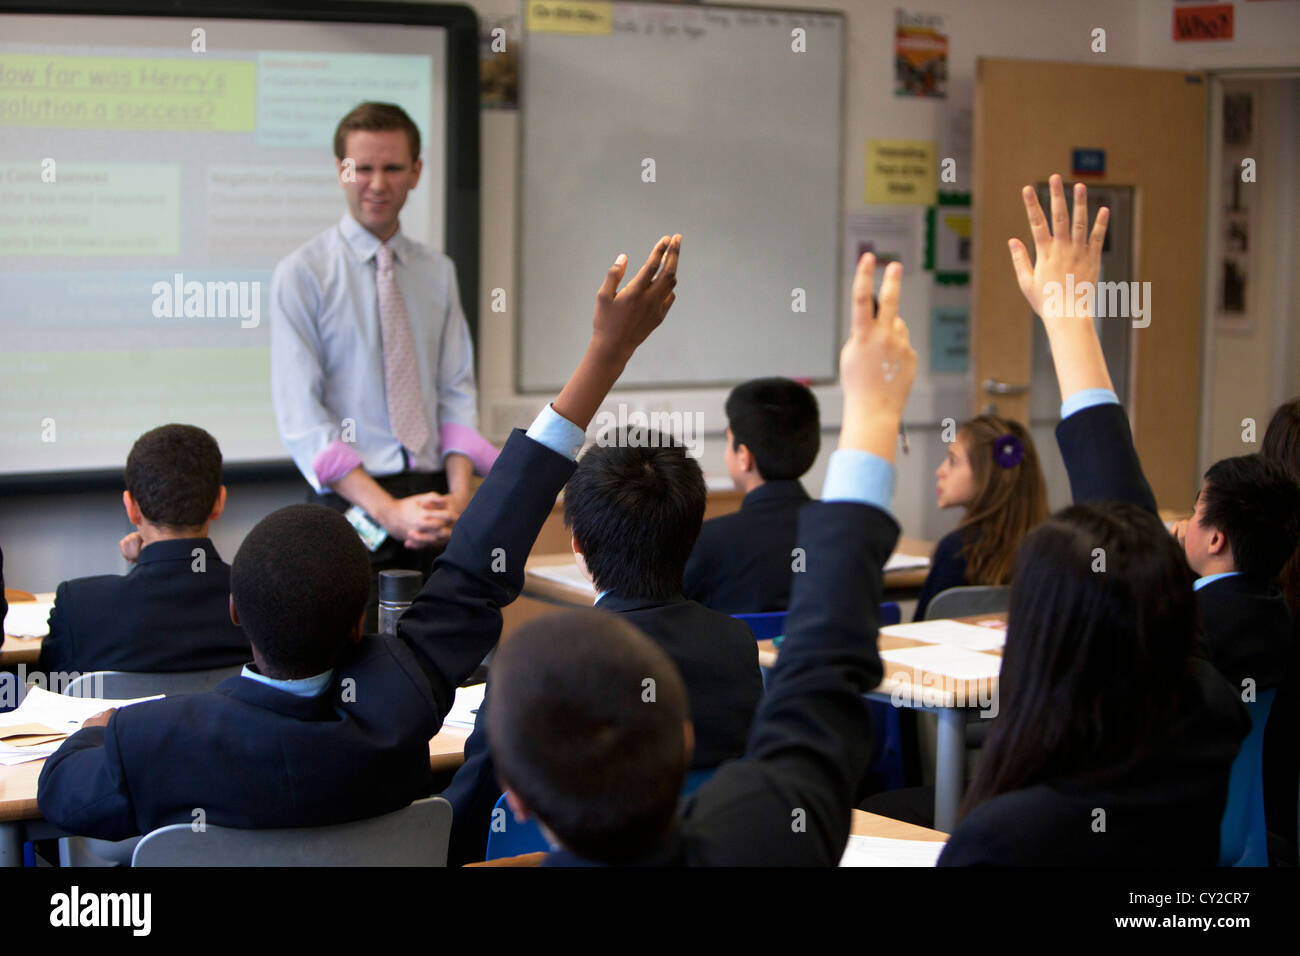 Teacher takes a class at Pimlico Academy, a modern secondary school providing aspirational education in London, UK. Stock Photo